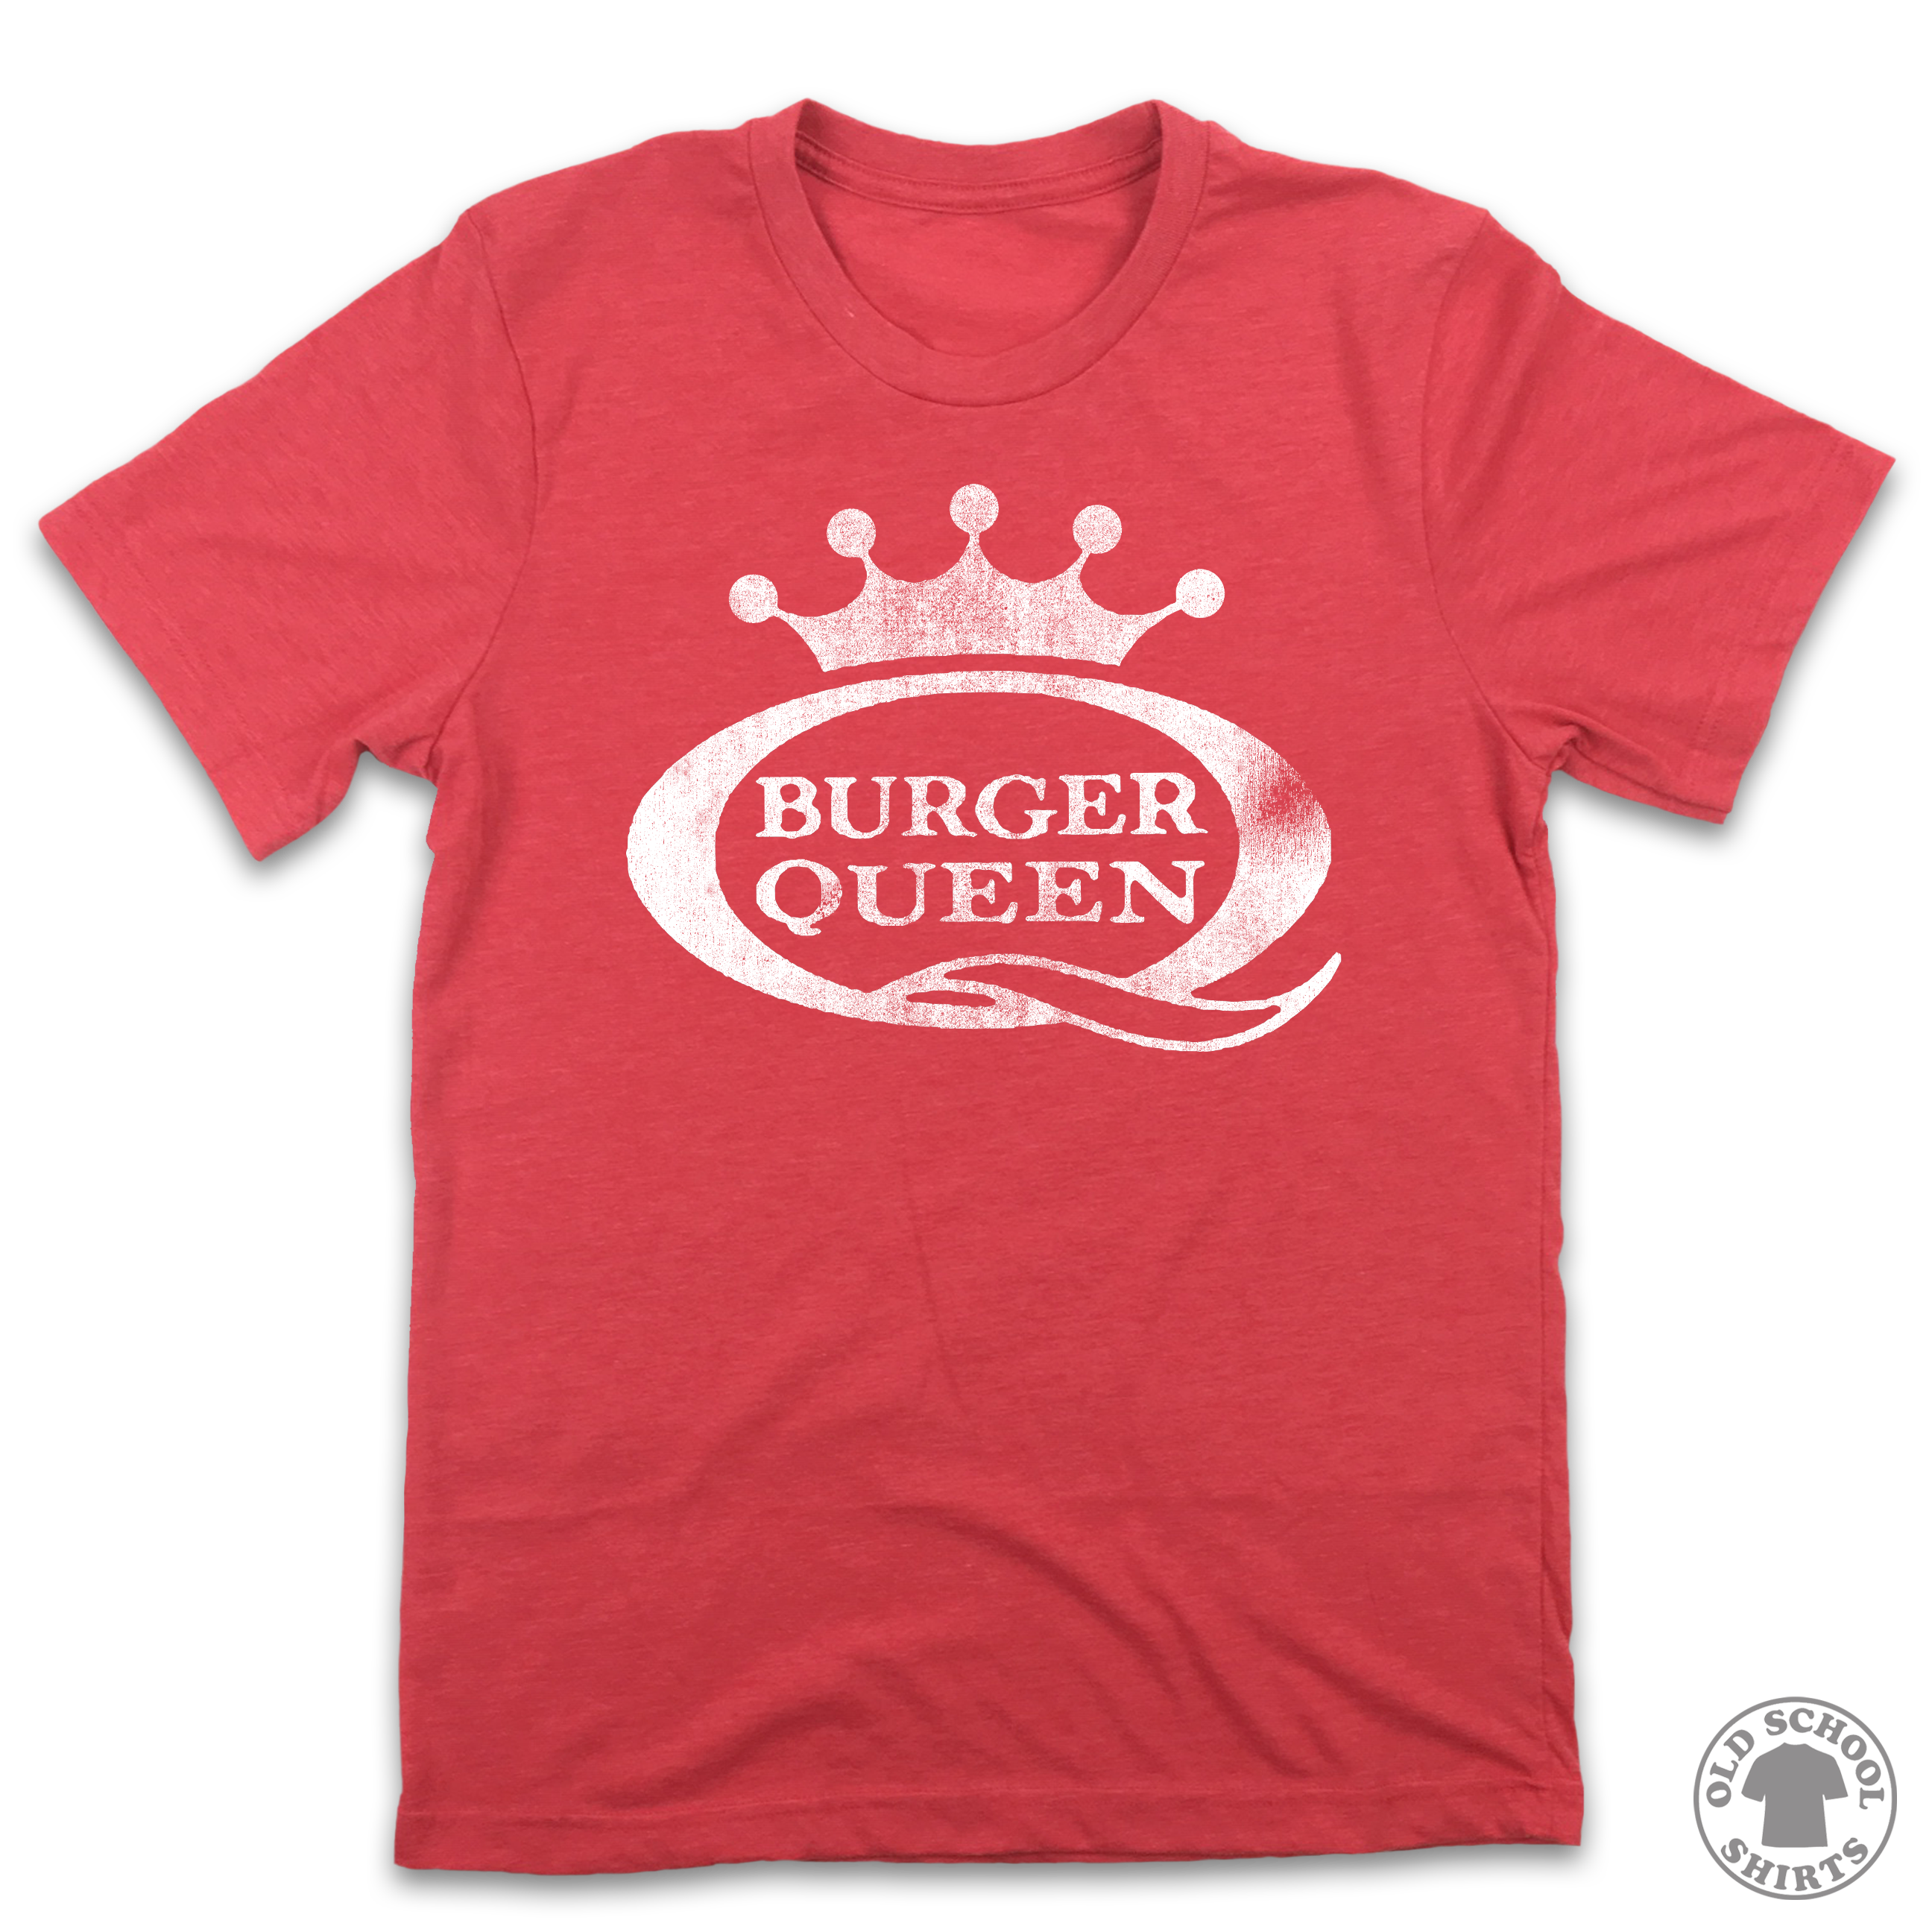 Burger Queen - Old School Shirts- Retro Sports T Shirts